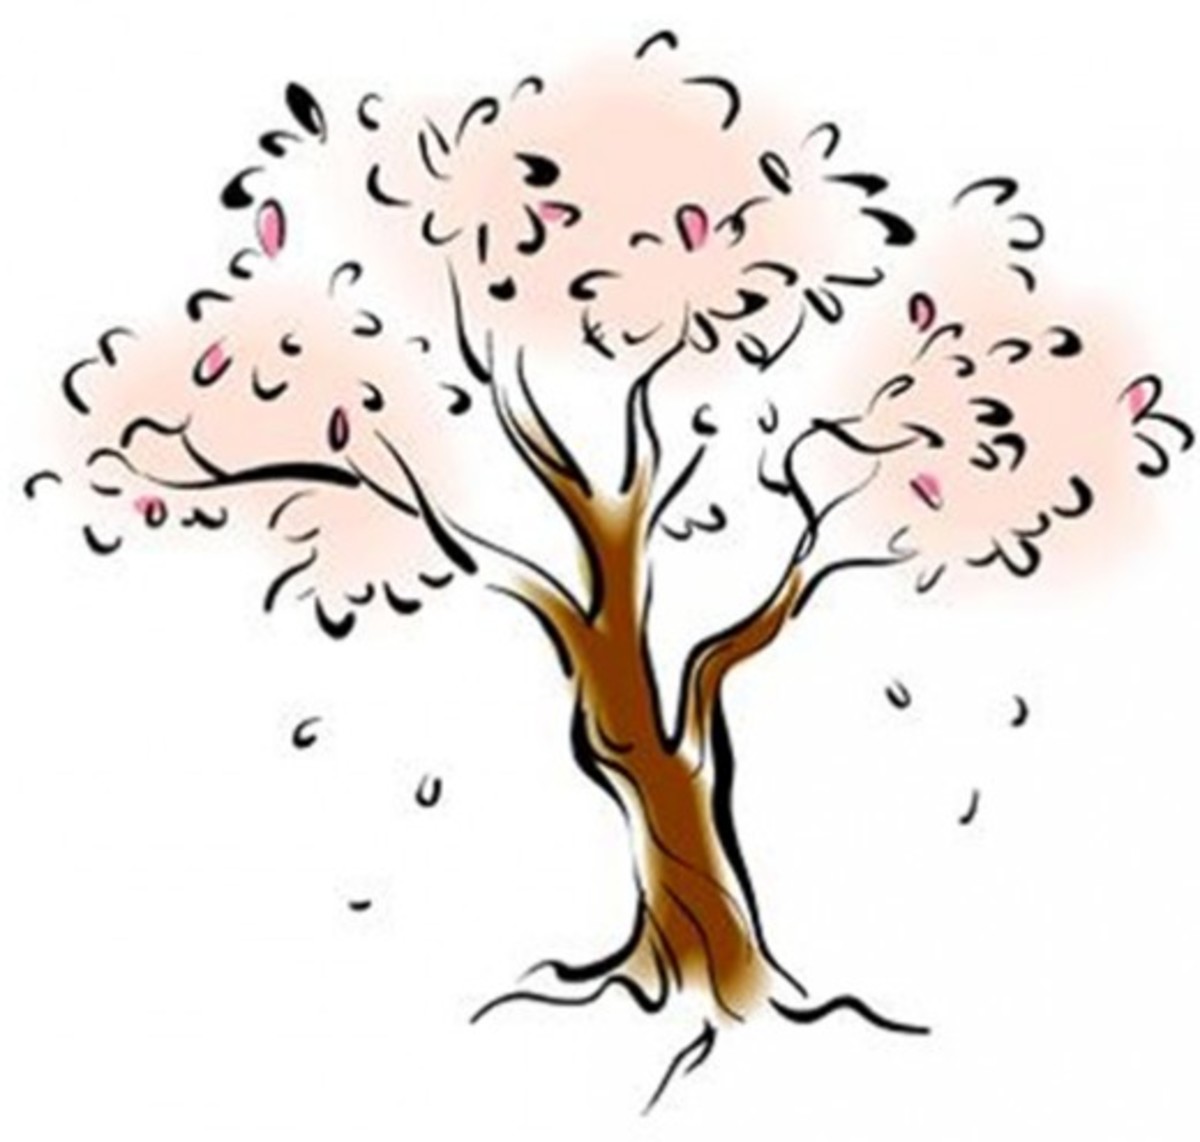 Blossoming Cherry Tree